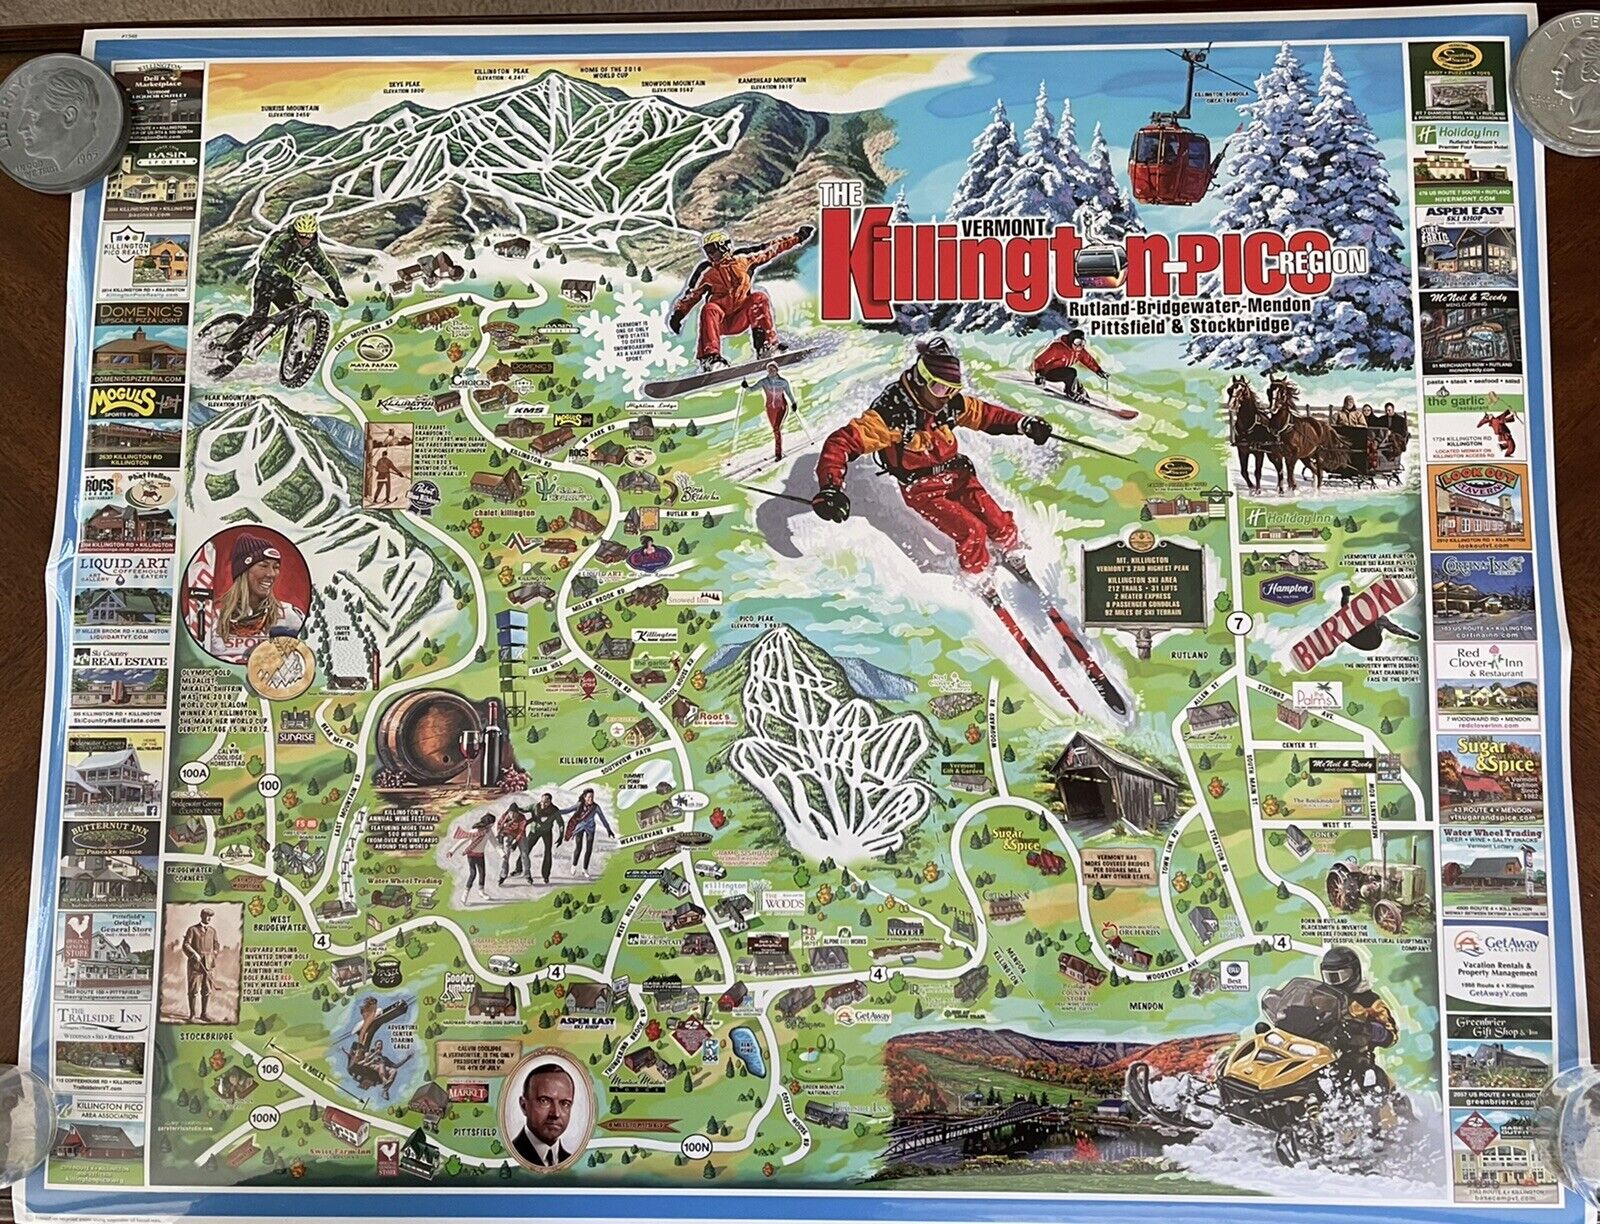 KILLINGTON-PICO VERMONT Poster Map of Ski Areas & Businesses (30.5”x 24.5”) 2017